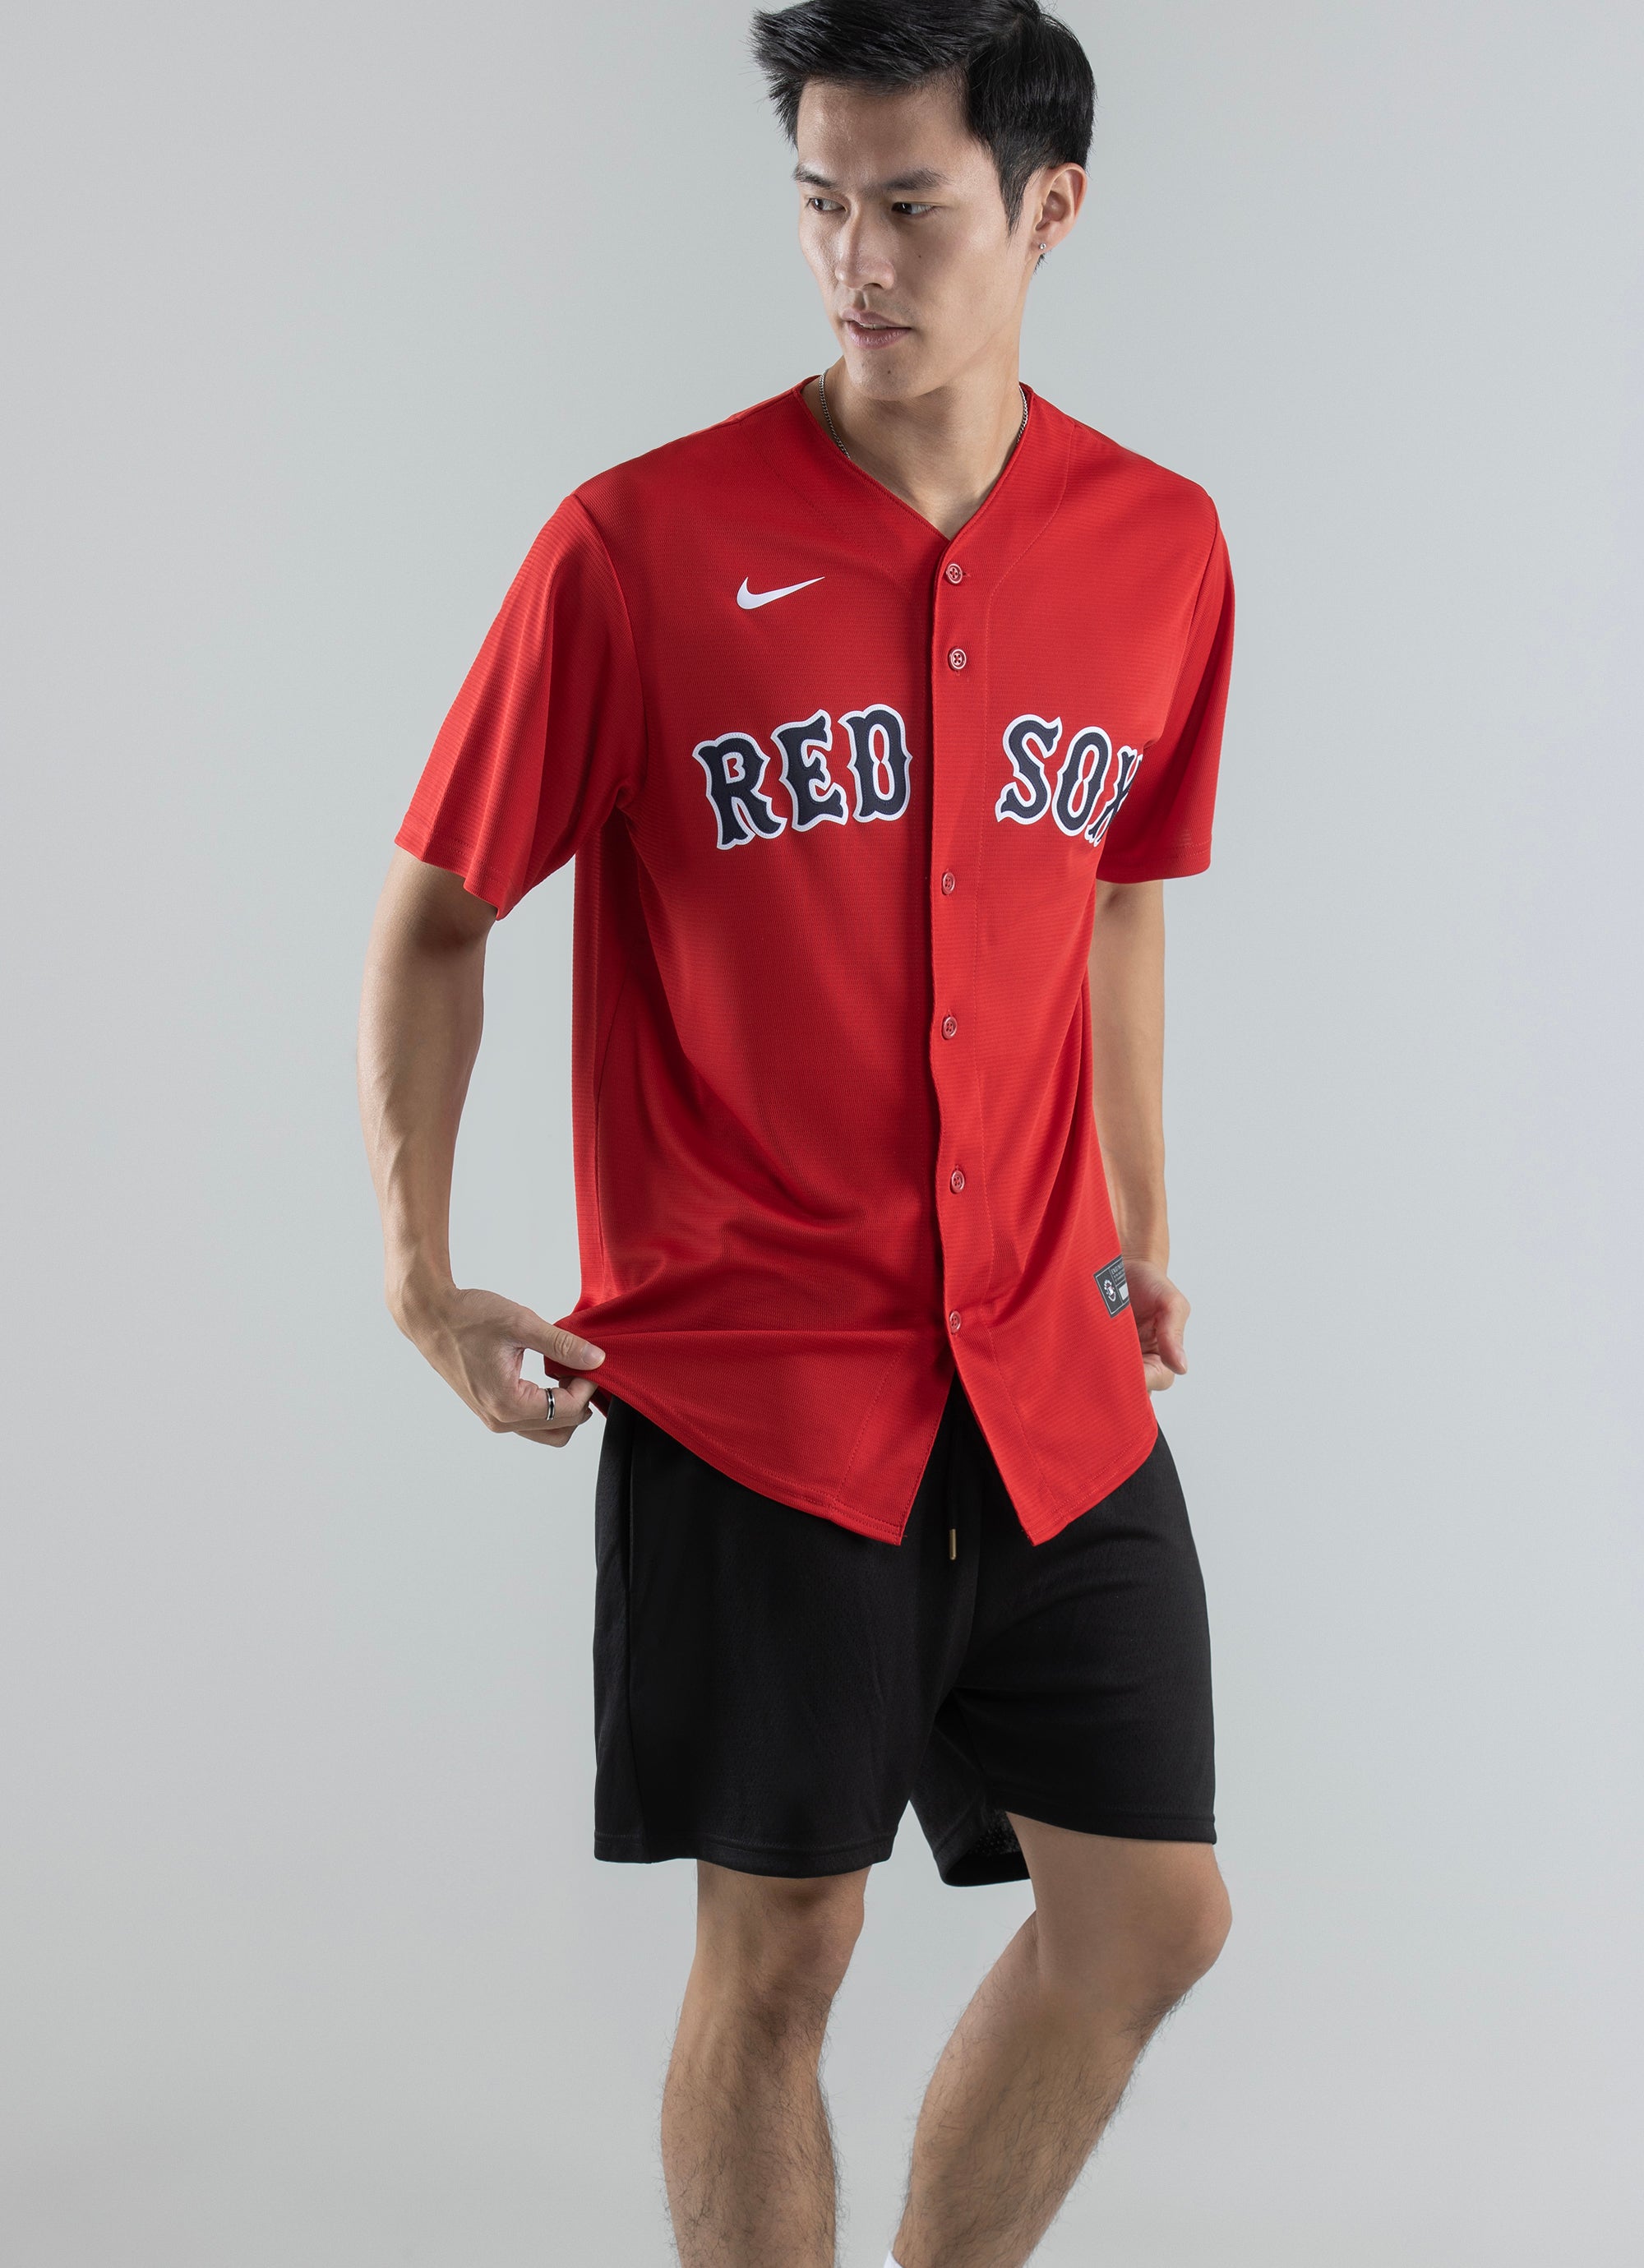 red sox baseball jersey